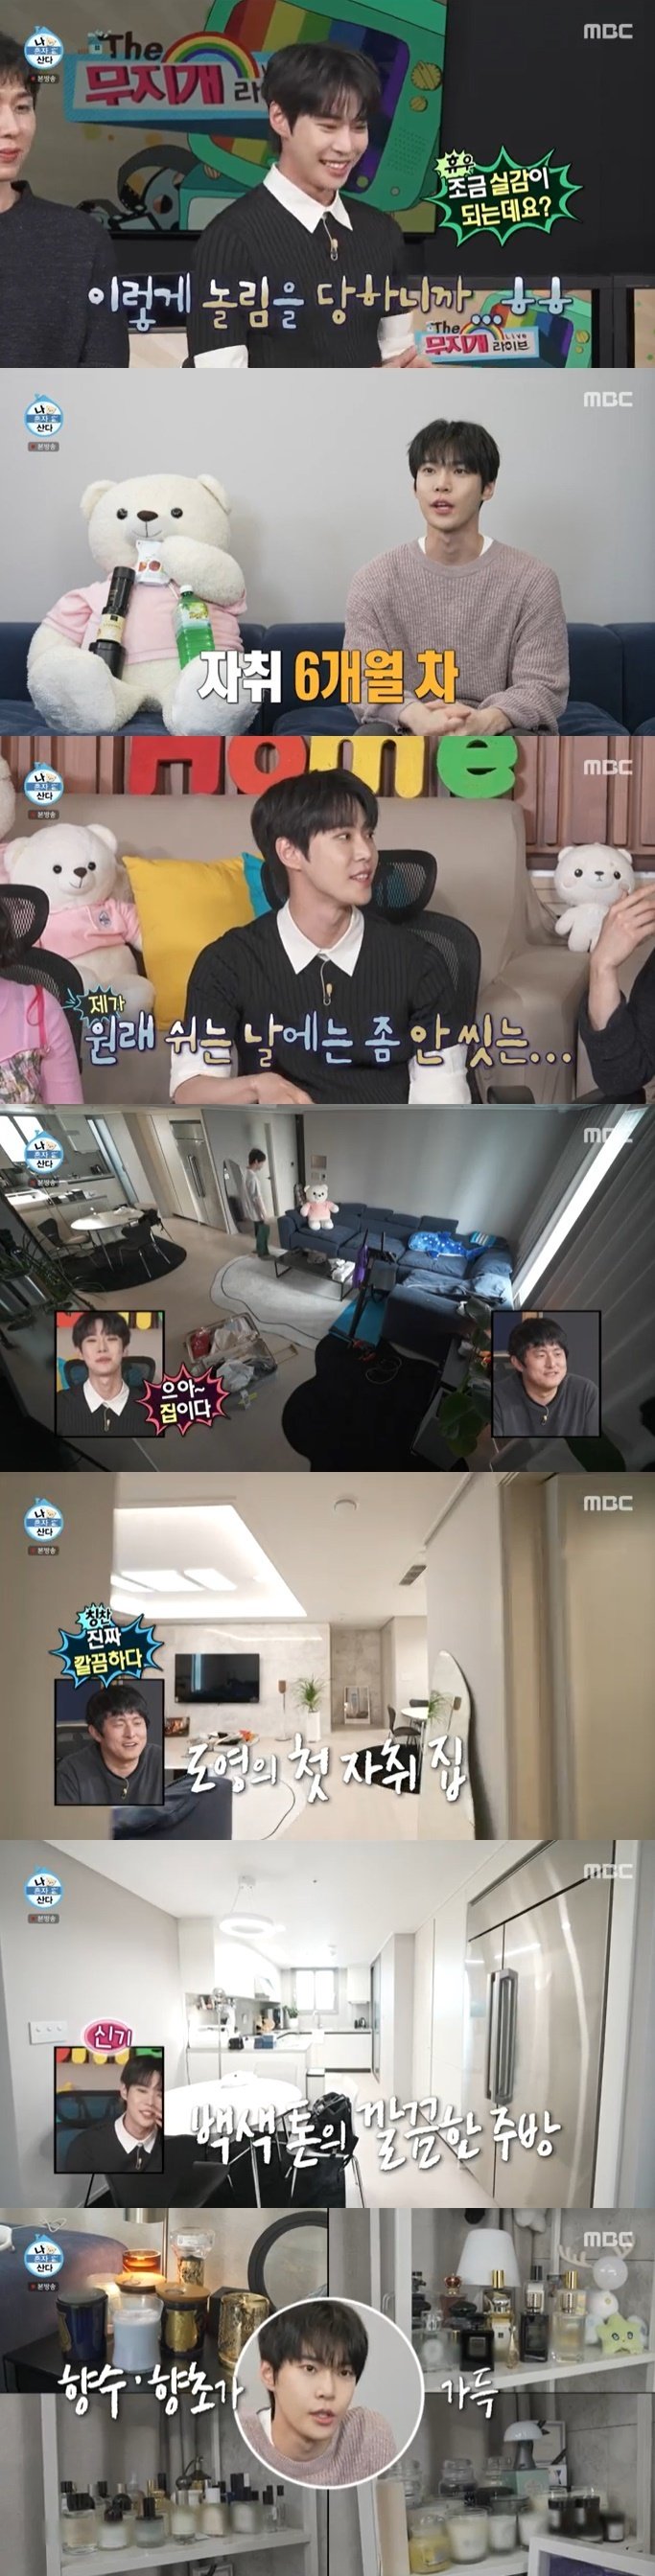 NCT 도영, 자취 6개월차 집 공개…"향수·향초로 스트레스 풀어" [RE:TV]